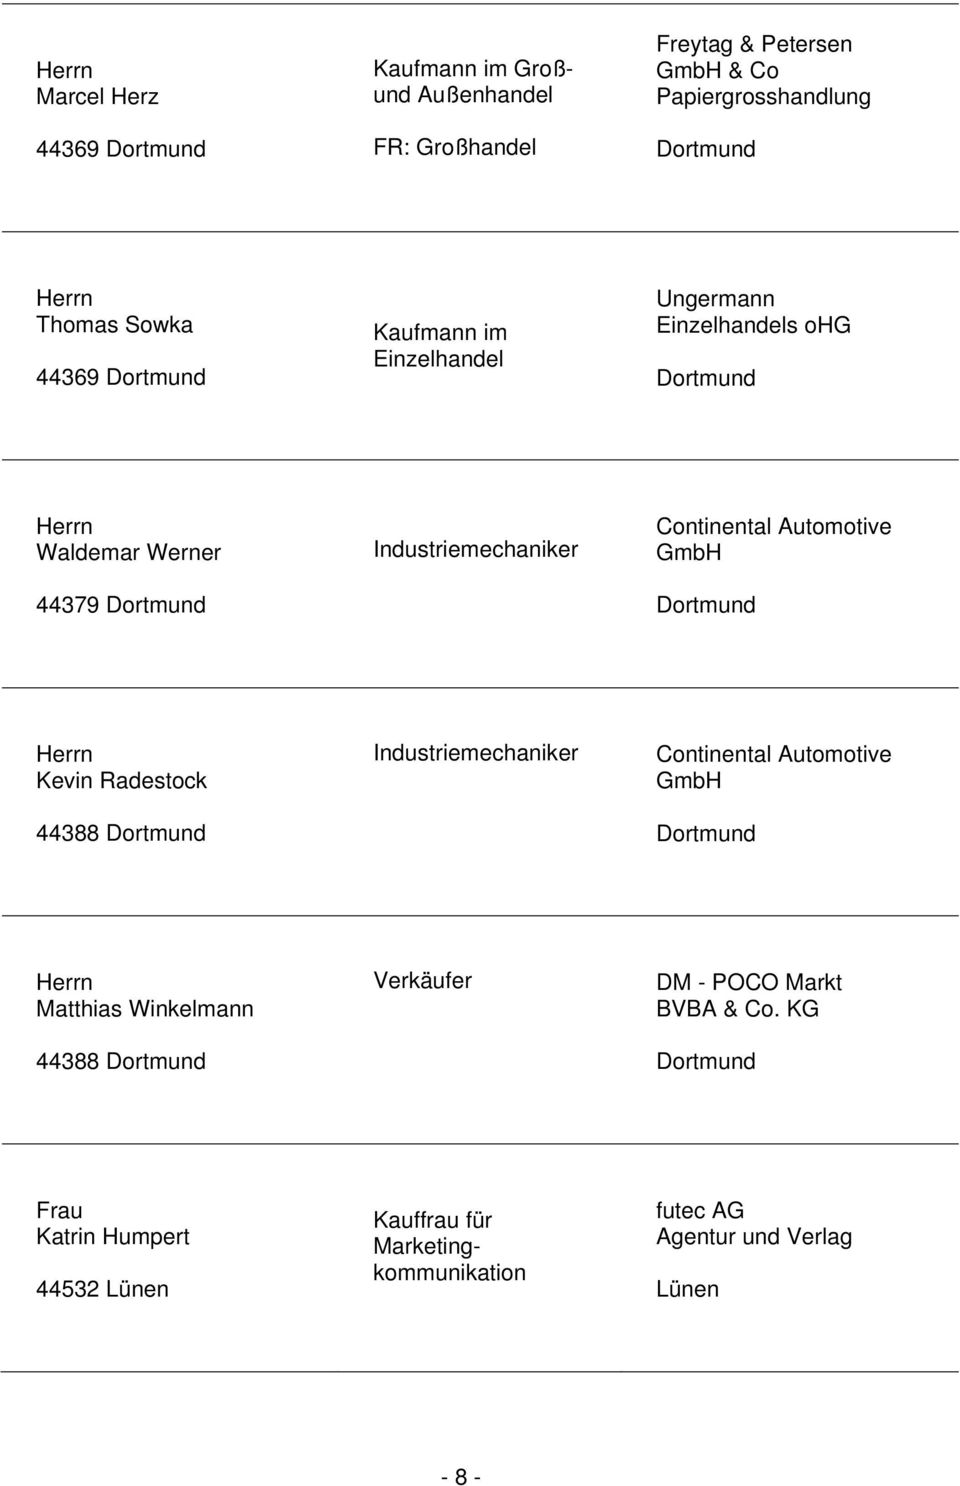 Industriemechaniker Continental Automotive Matthias Winkelmann 44388 Verkäufer DM - POCO Markt BVBA